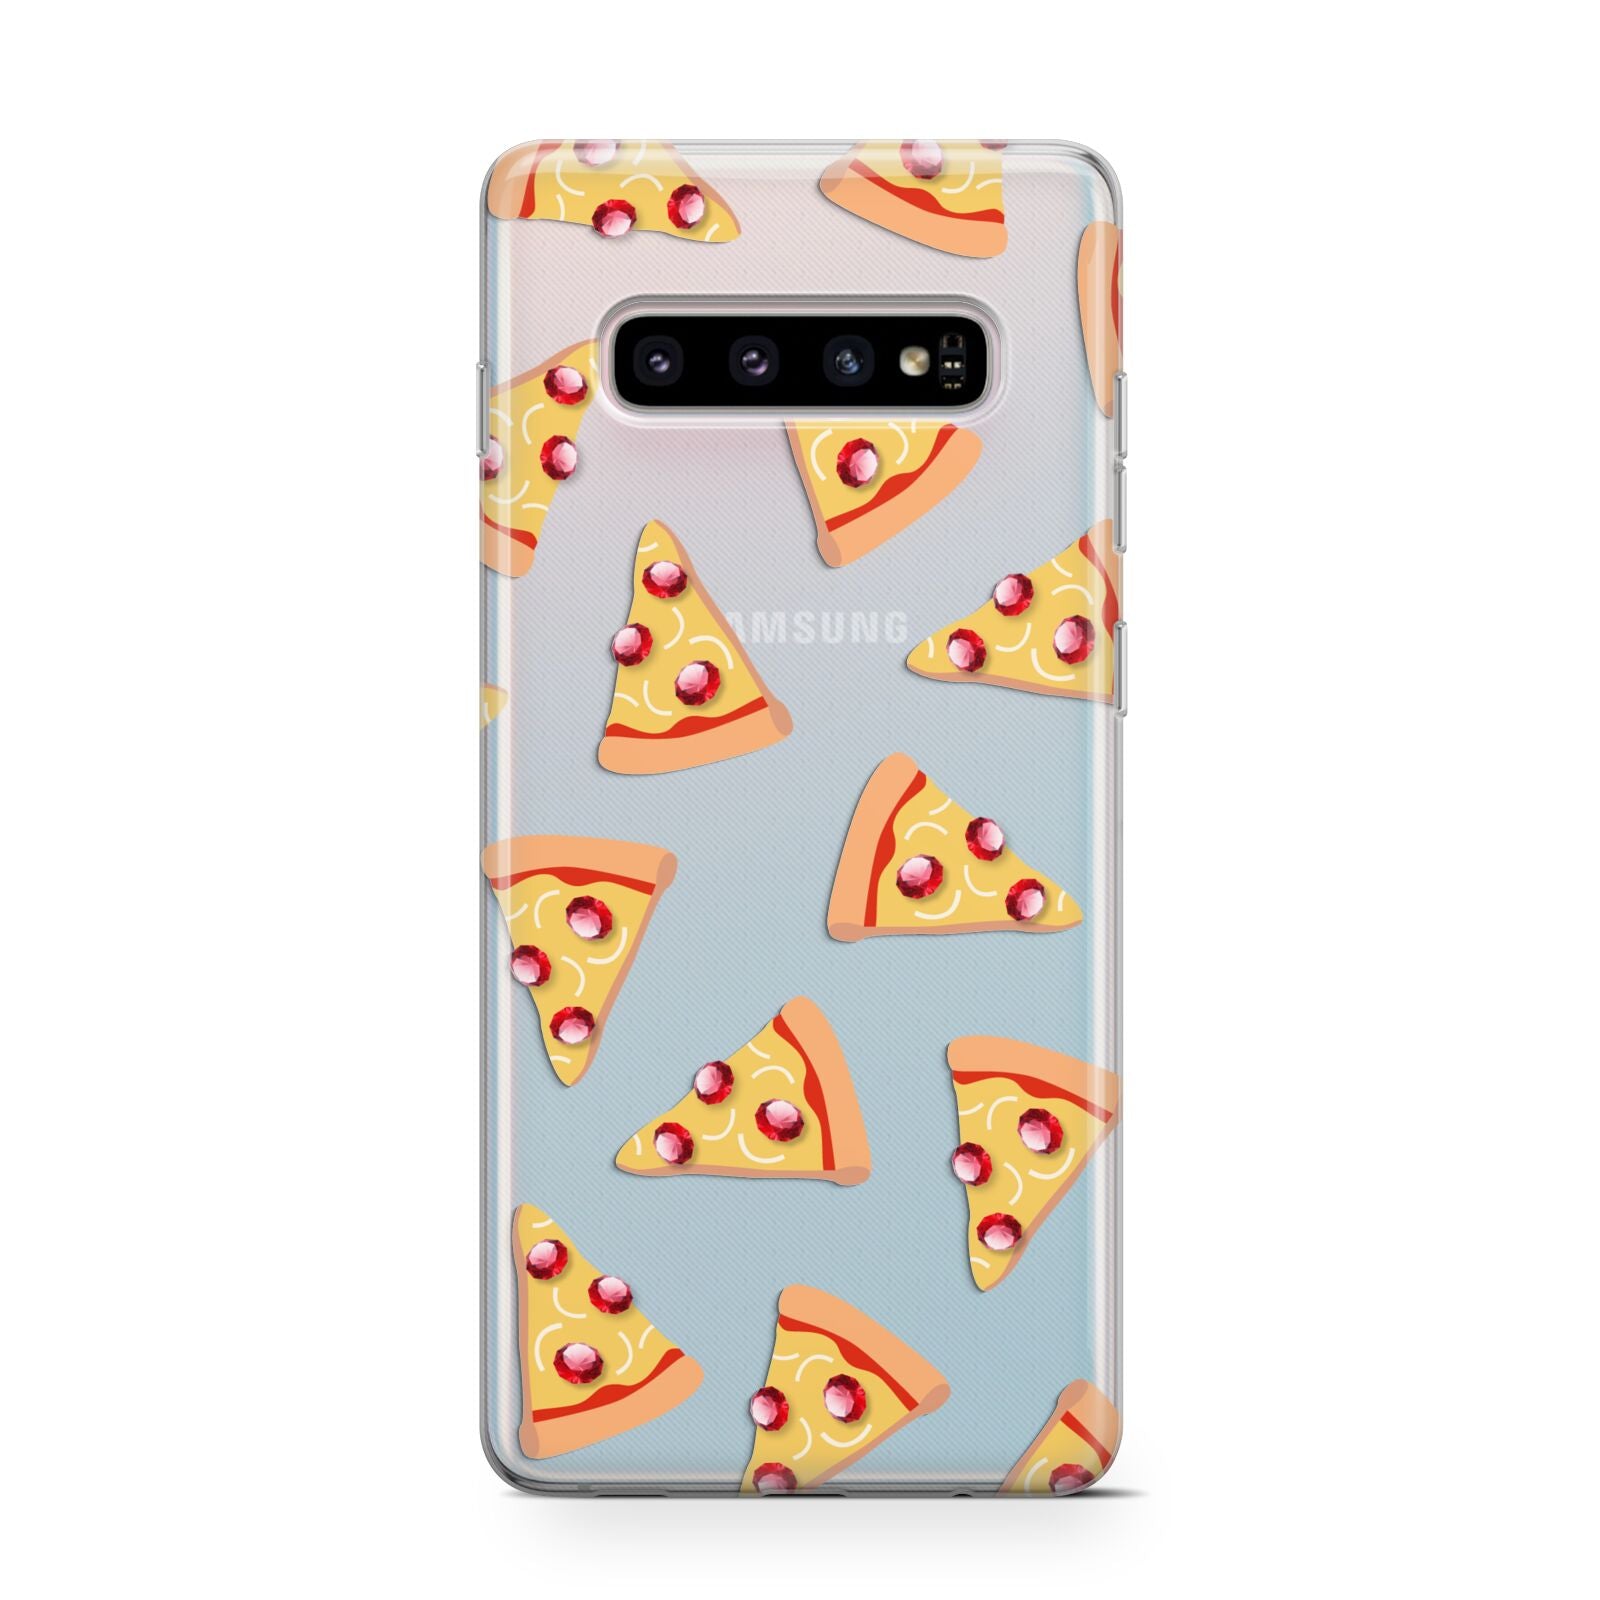 Rubies on Cartoon Pizza Slices Samsung Galaxy S10 Case